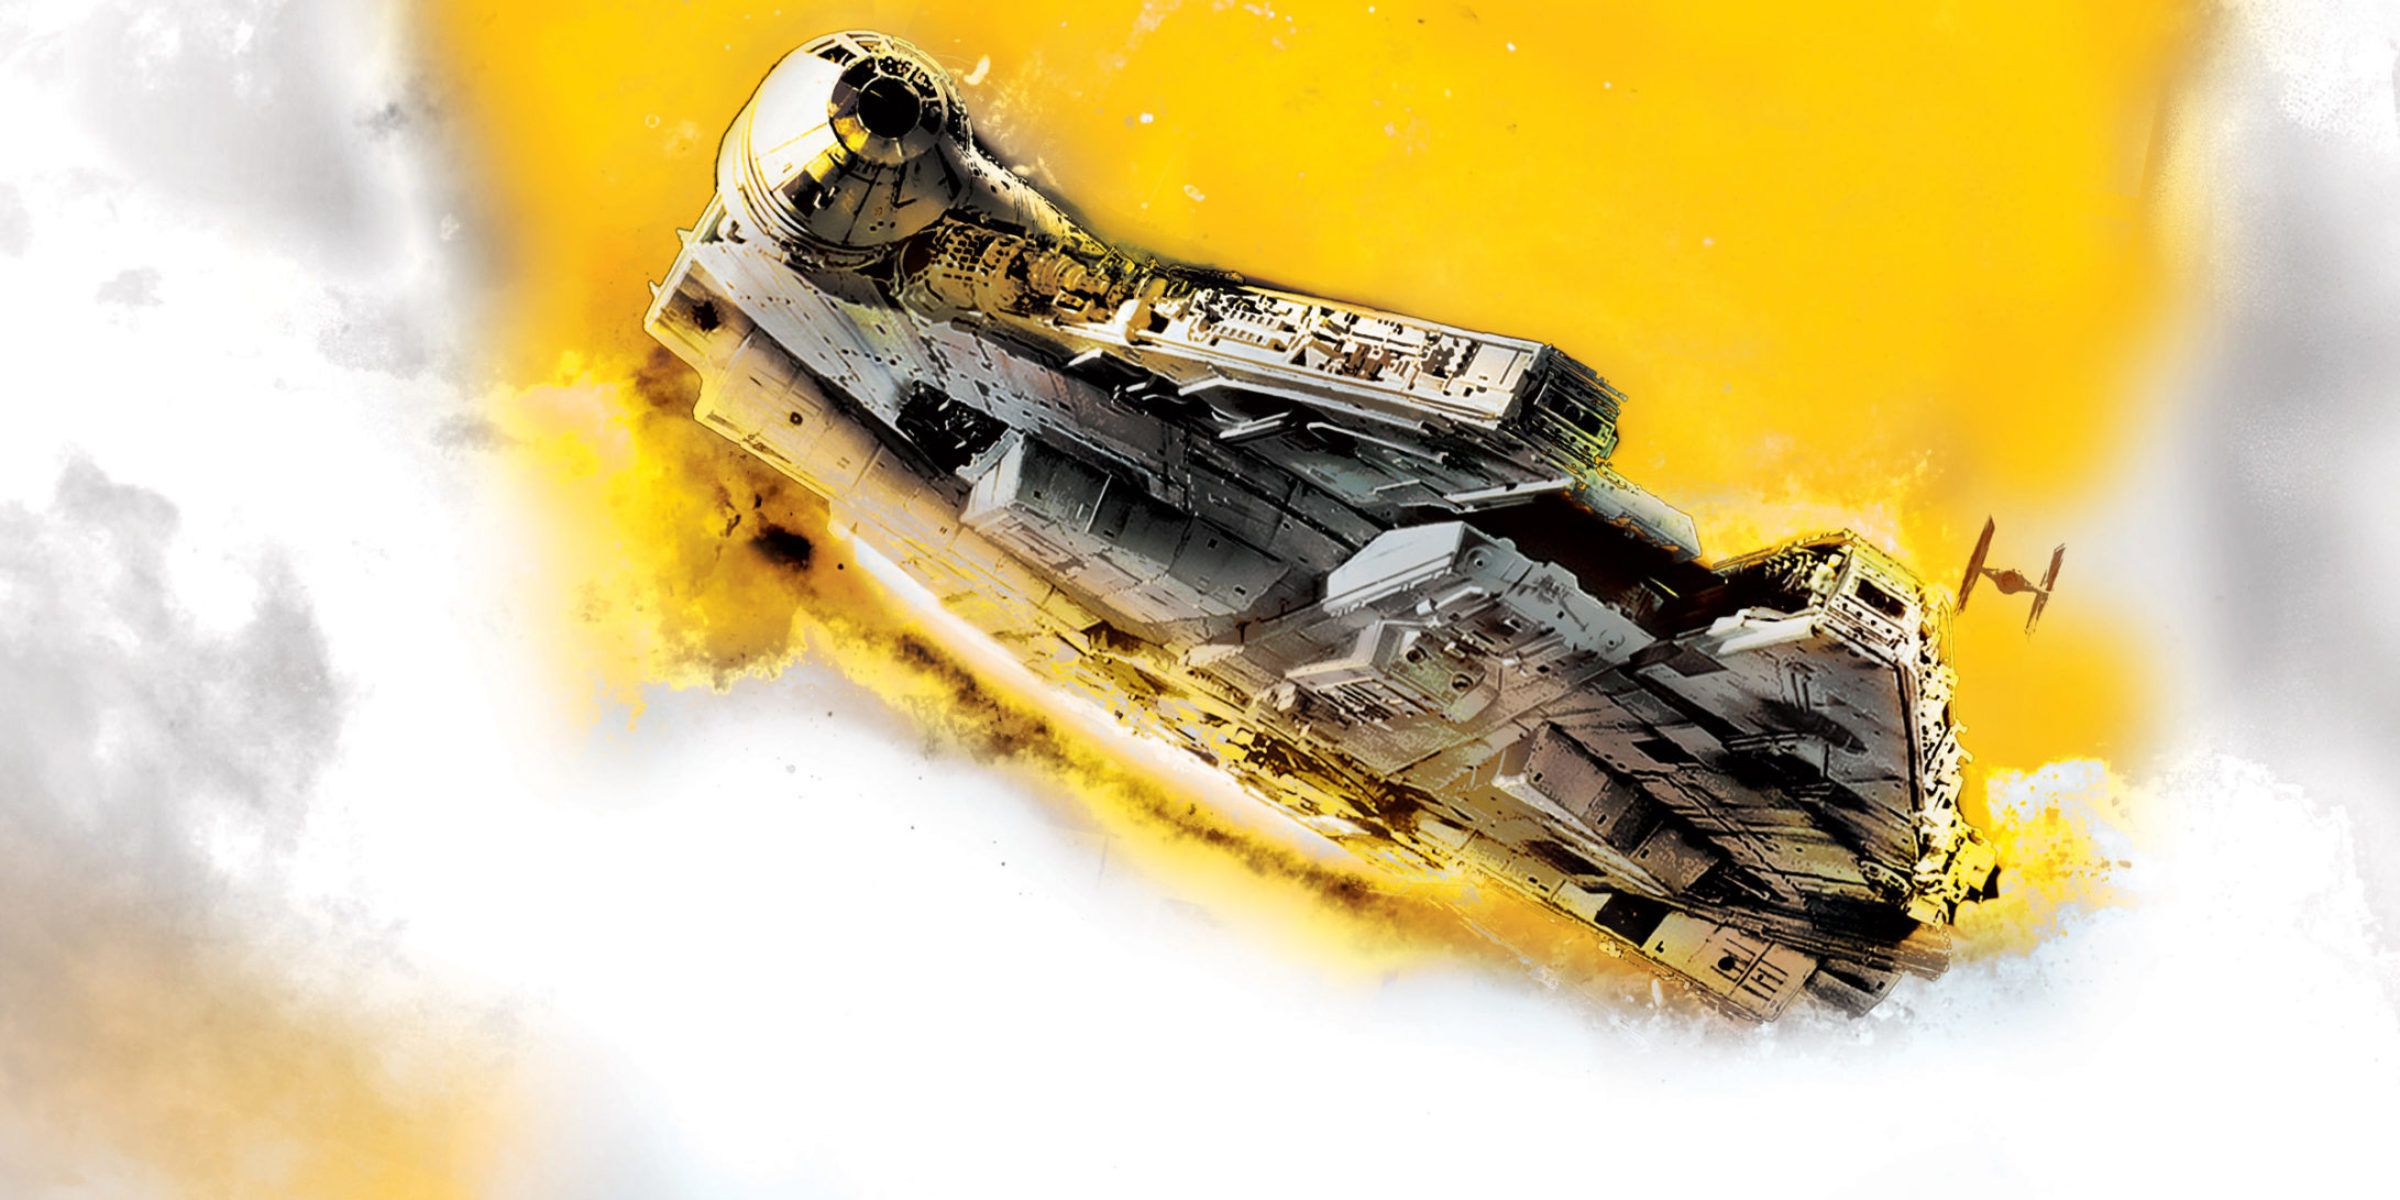 Cover art for Star Wars Aftermath novel